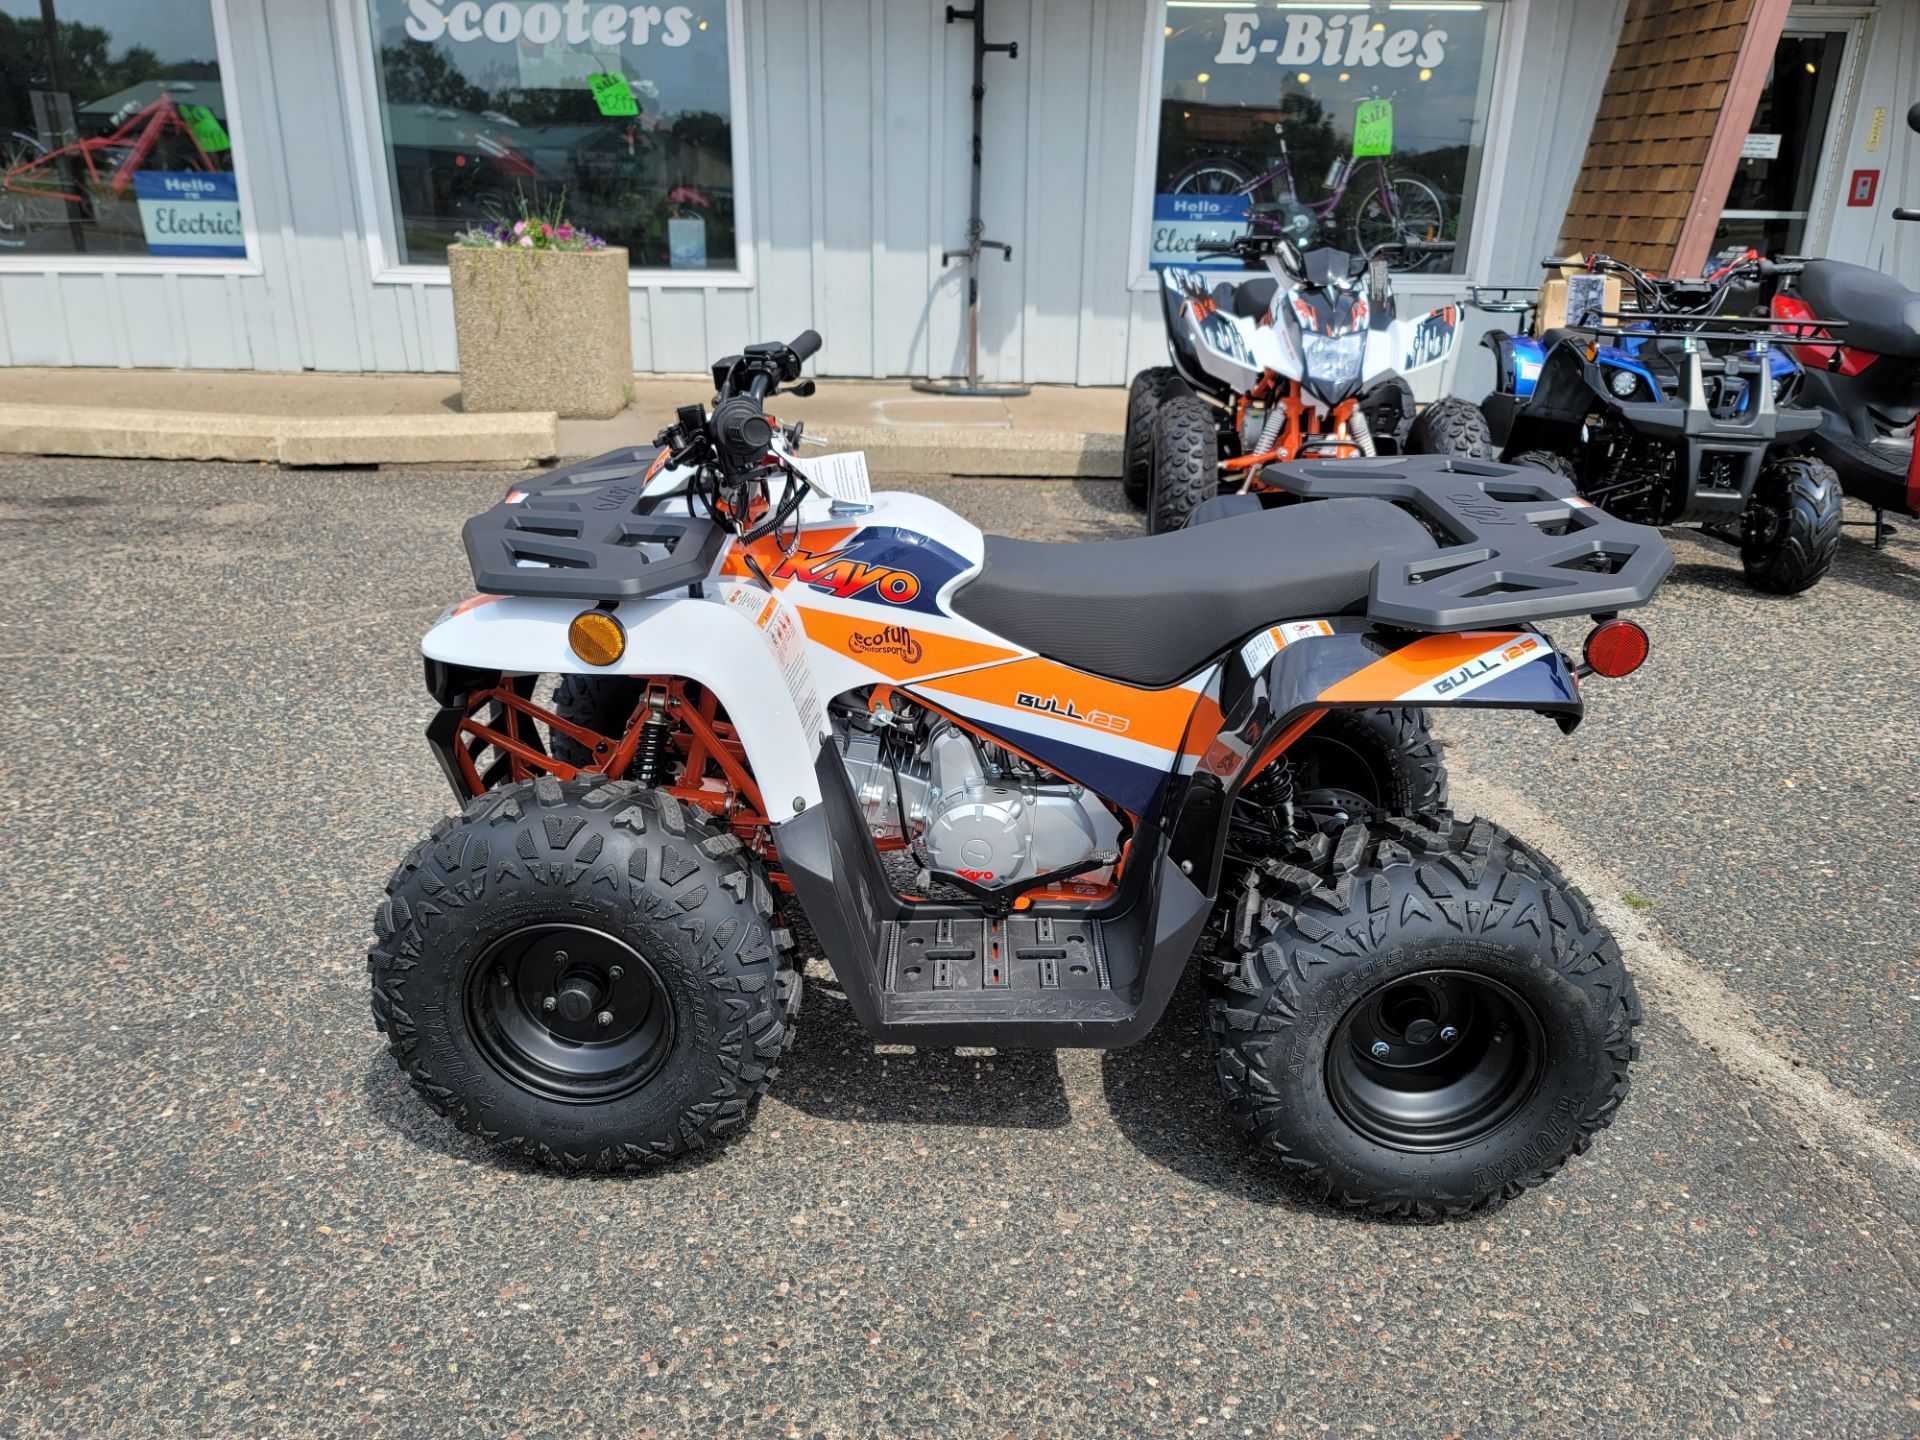 2023 Kayo Bull 125cc Youth ATV in Forest Lake, Minnesota - Photo 4